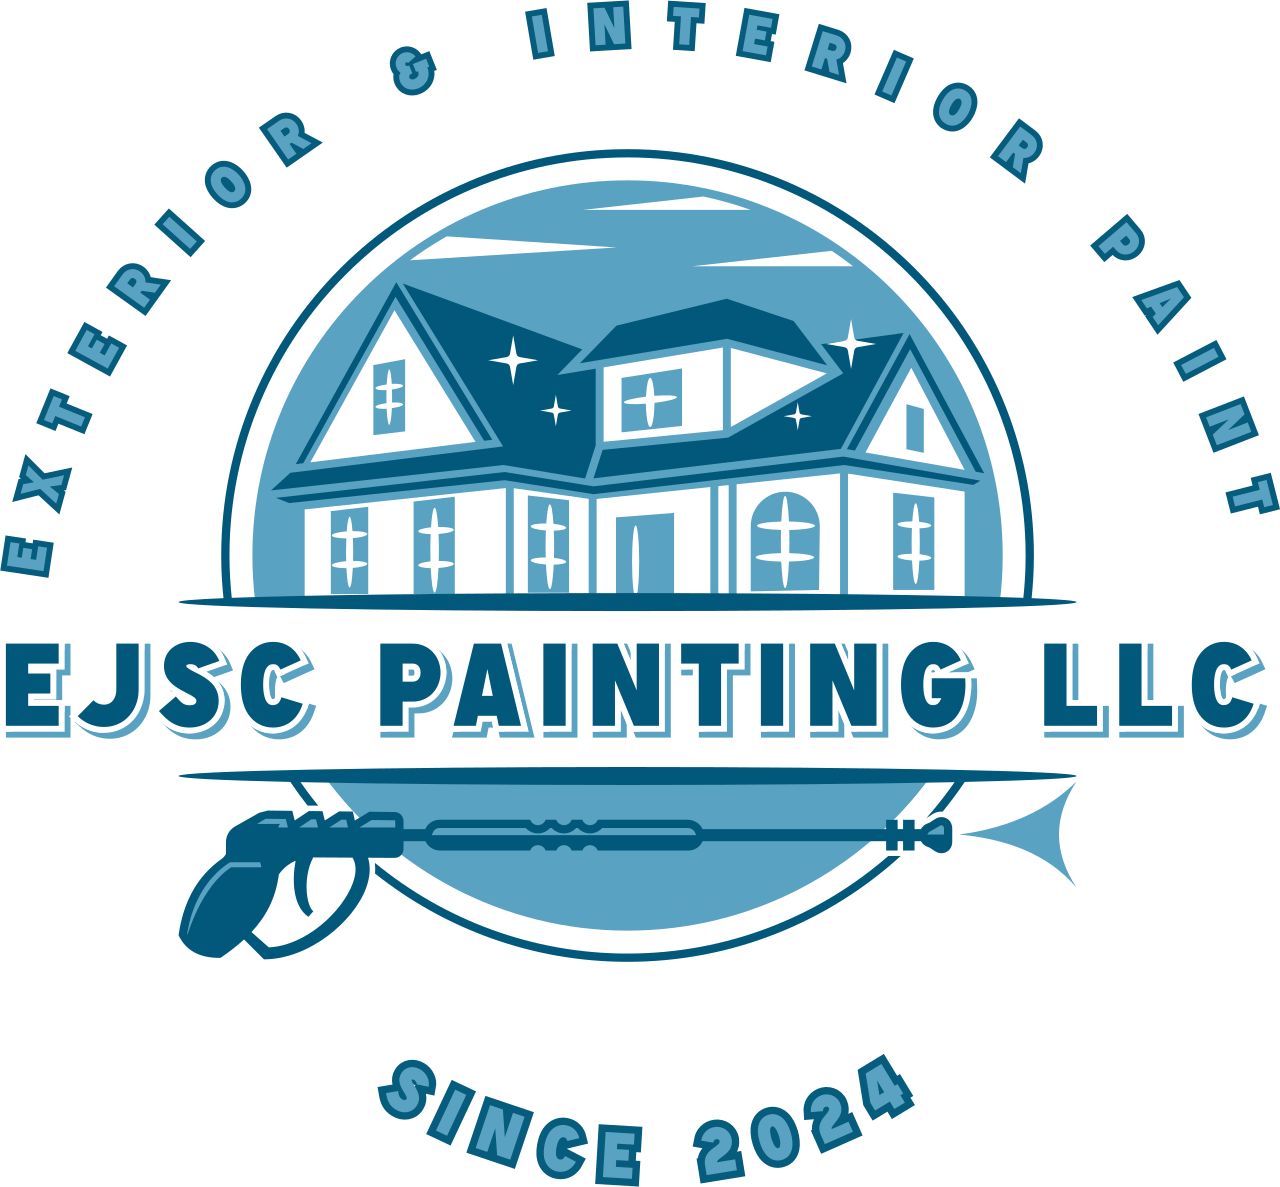 EJSC PAINTING LLC's logo